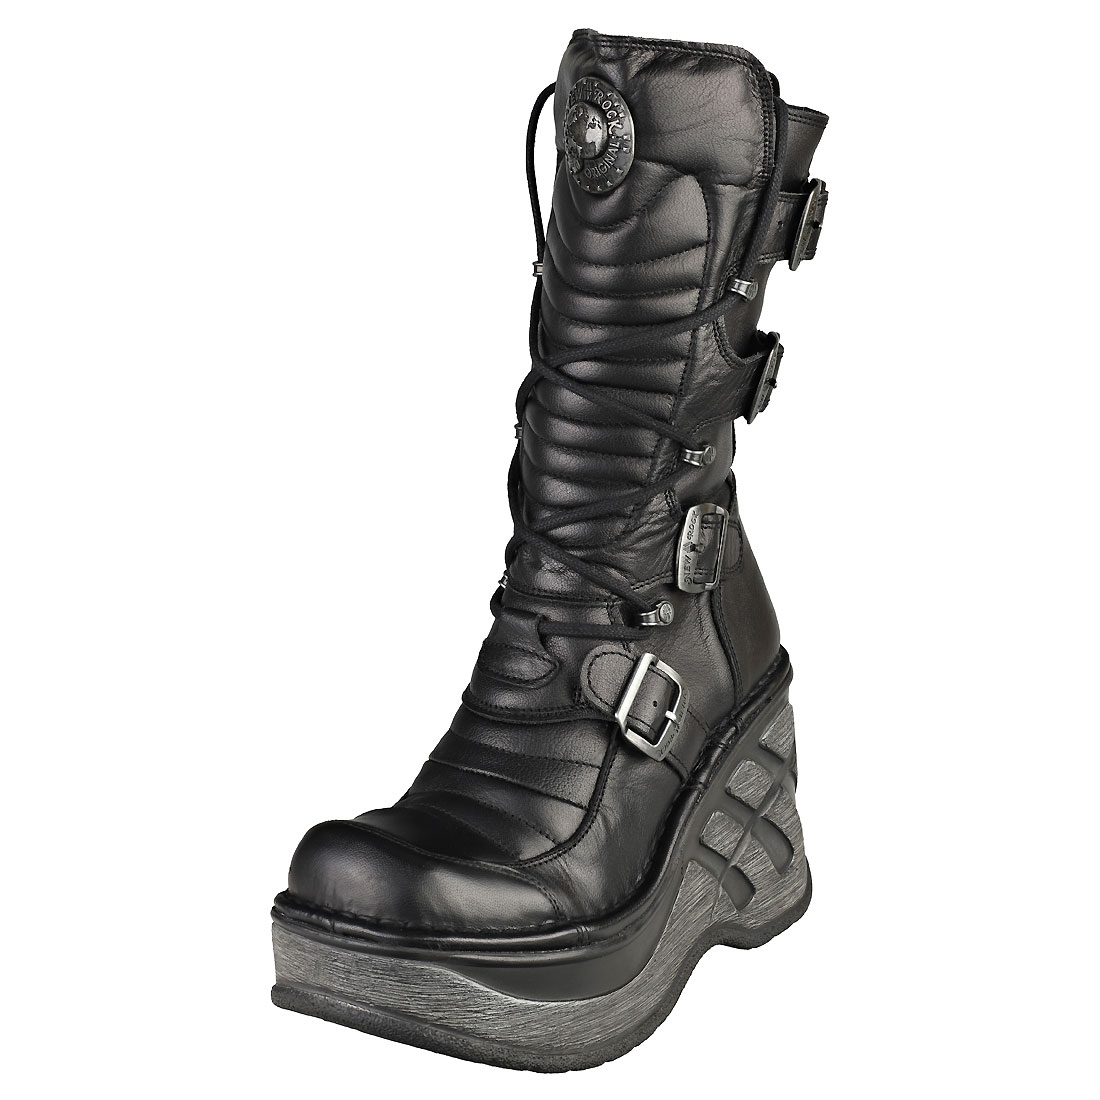 NEW ROCK CUNA M-sp9873-c4 Unisex Black Platform Boots £149.99 - PicClick UK